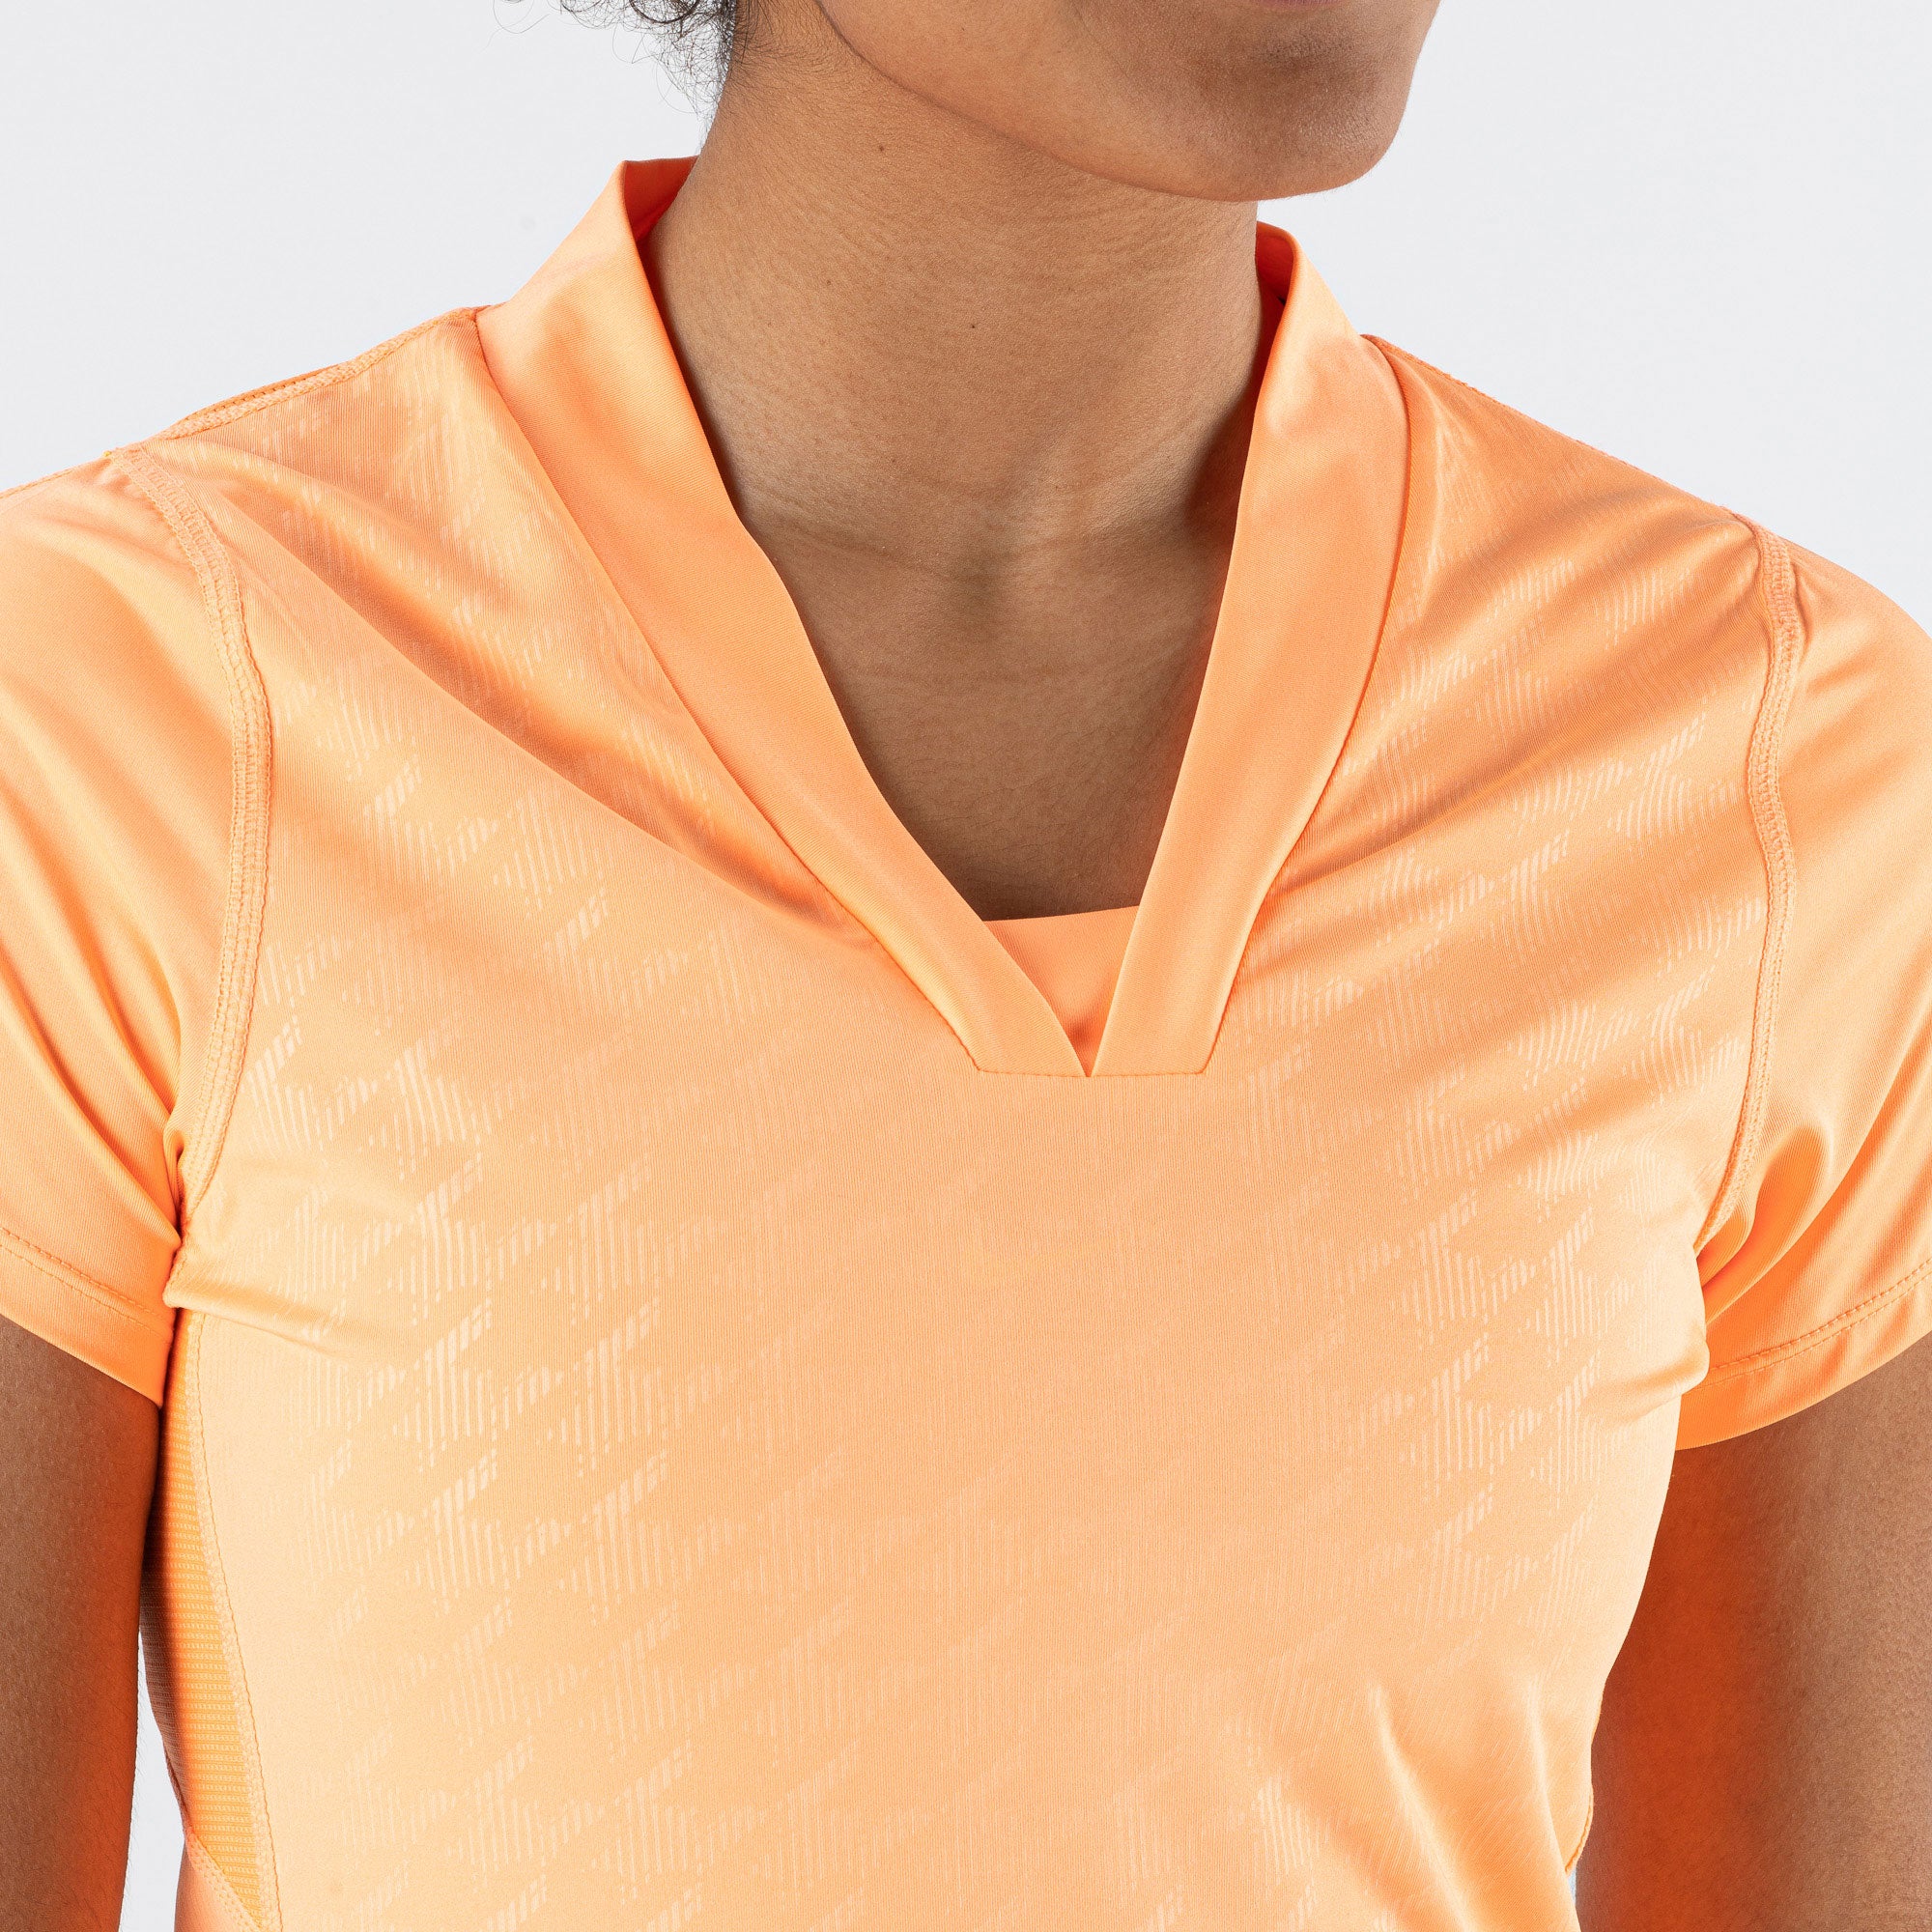 Sjeng Sports Hertz Women's Tennis Shirt Orange (3)